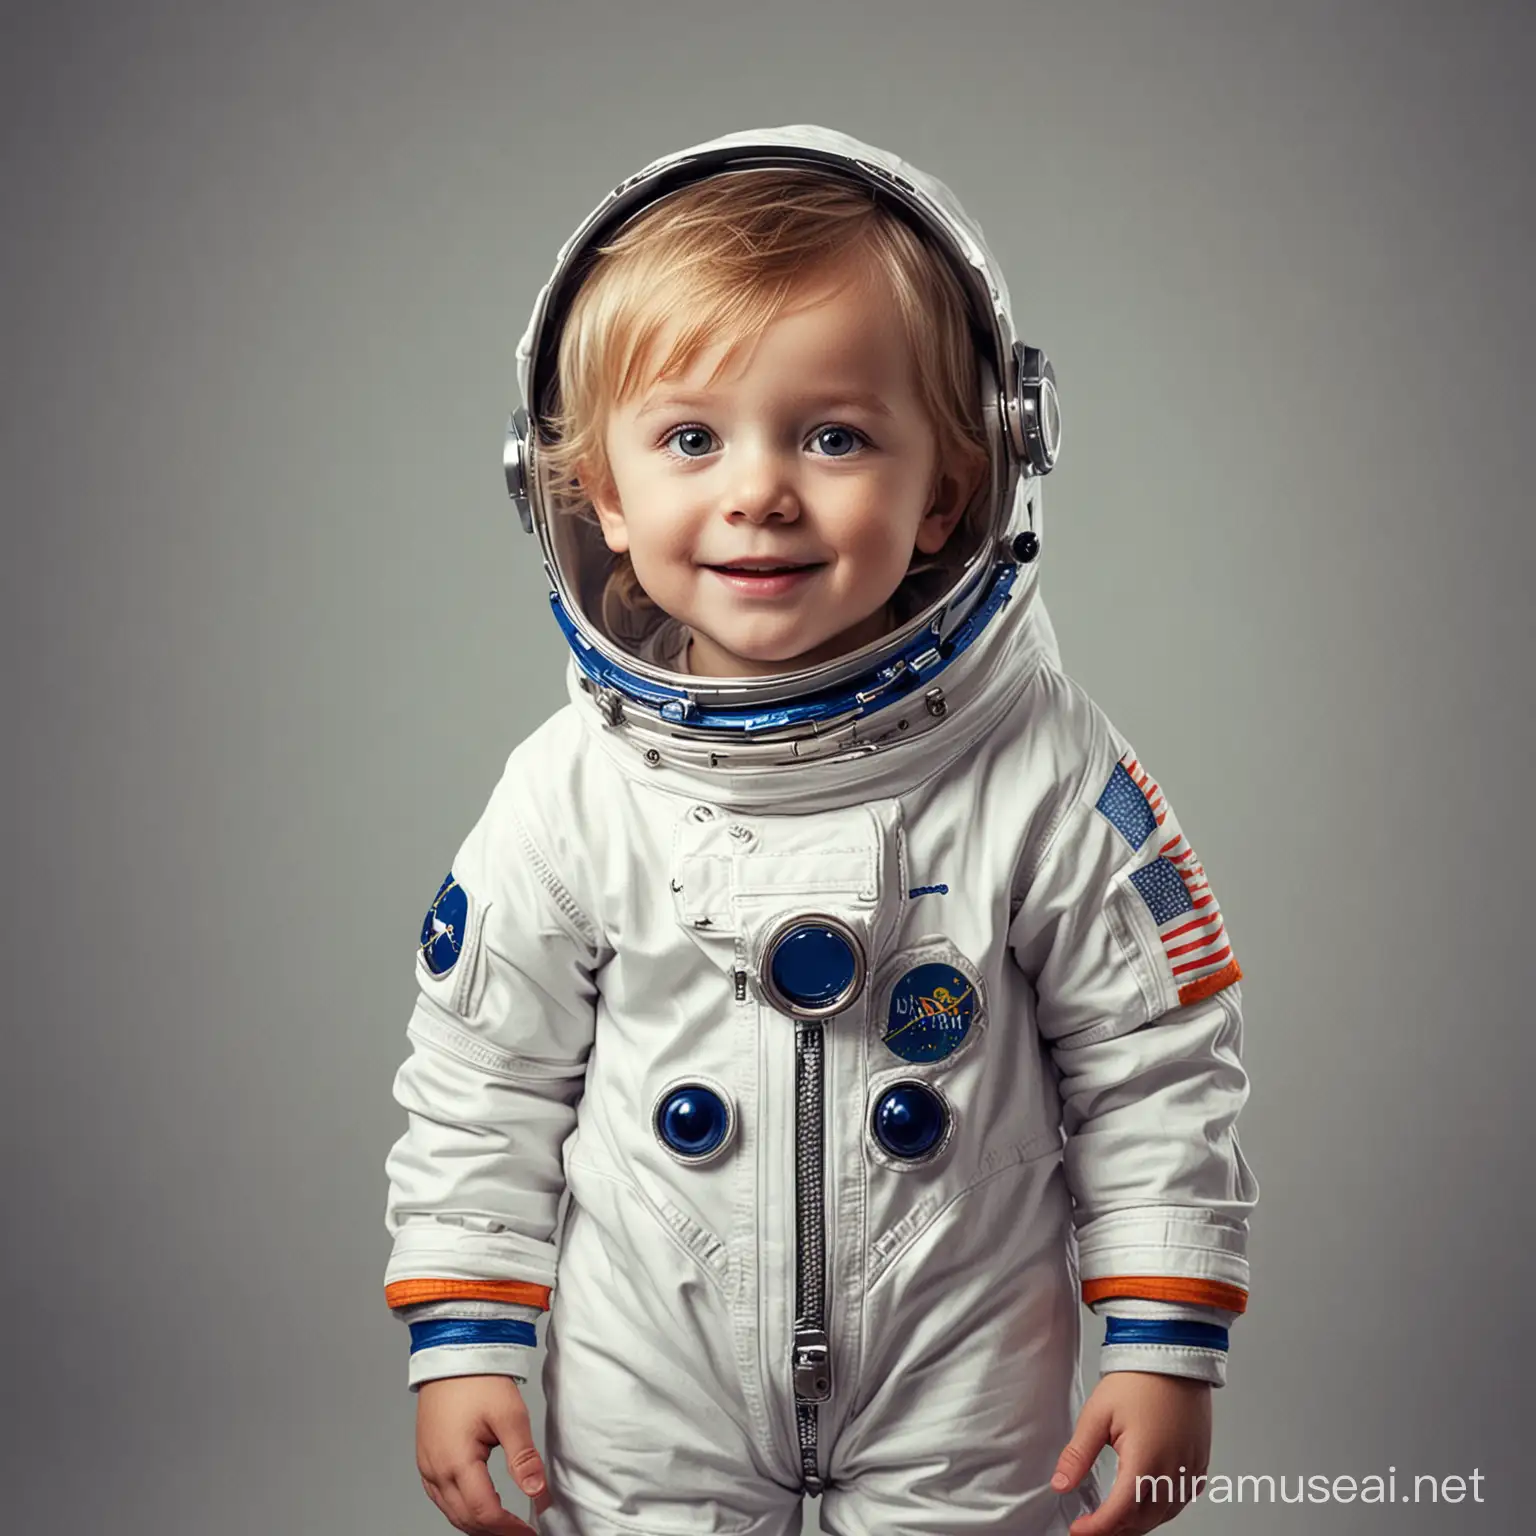 Adventurous Little Astronaut Boy Exploring the Cosmic Wilderness